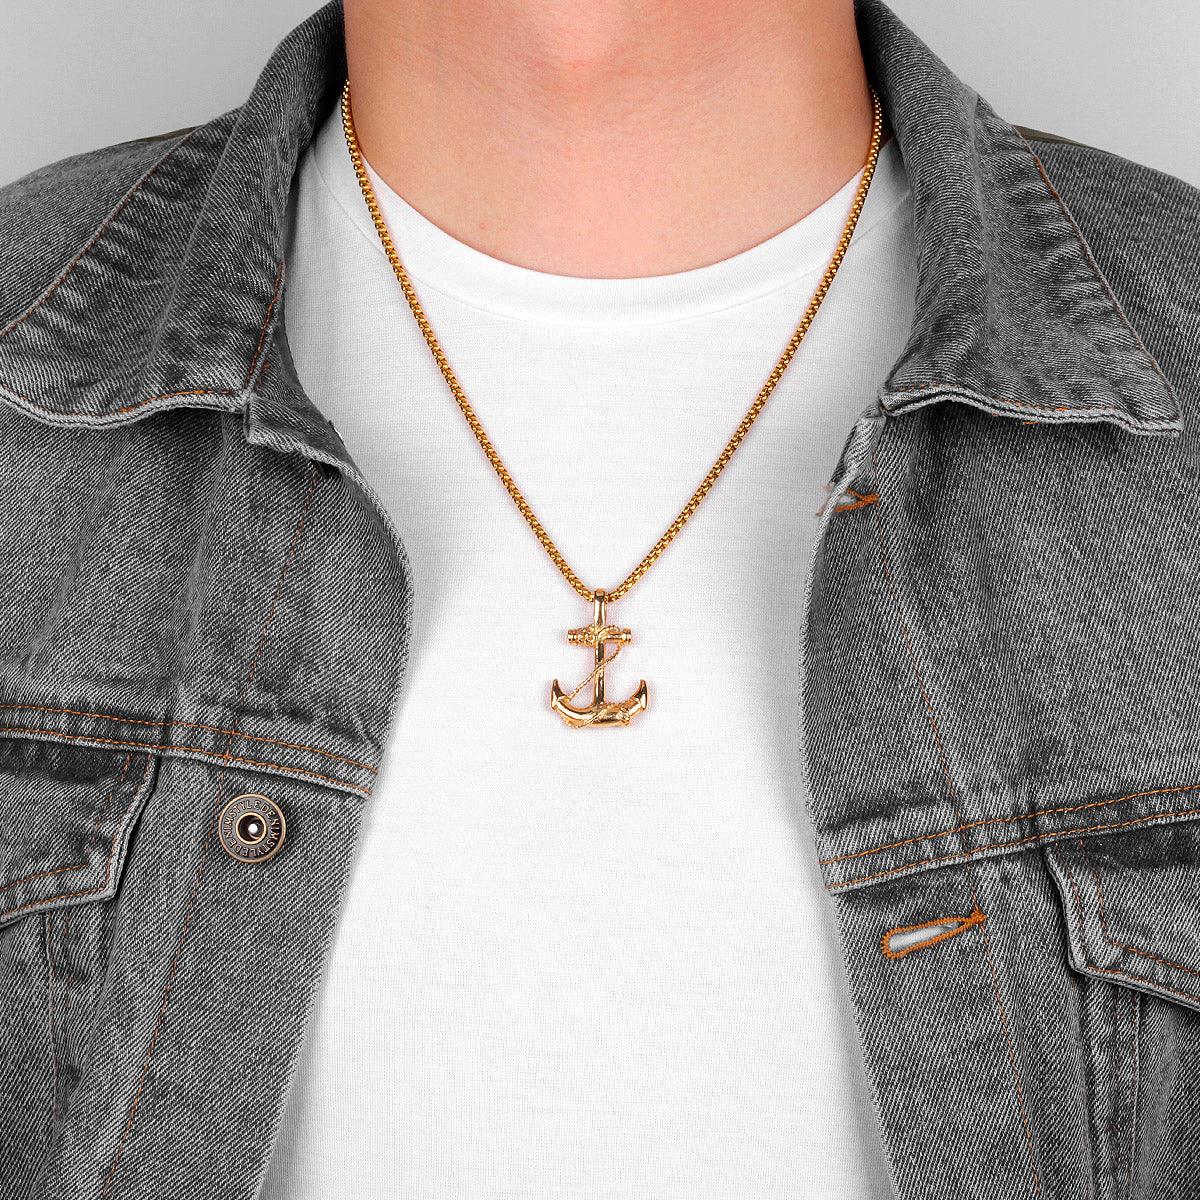 Colar Anchor - Alfa Wear - colar, colar de aço, colar de metal, colar masculino